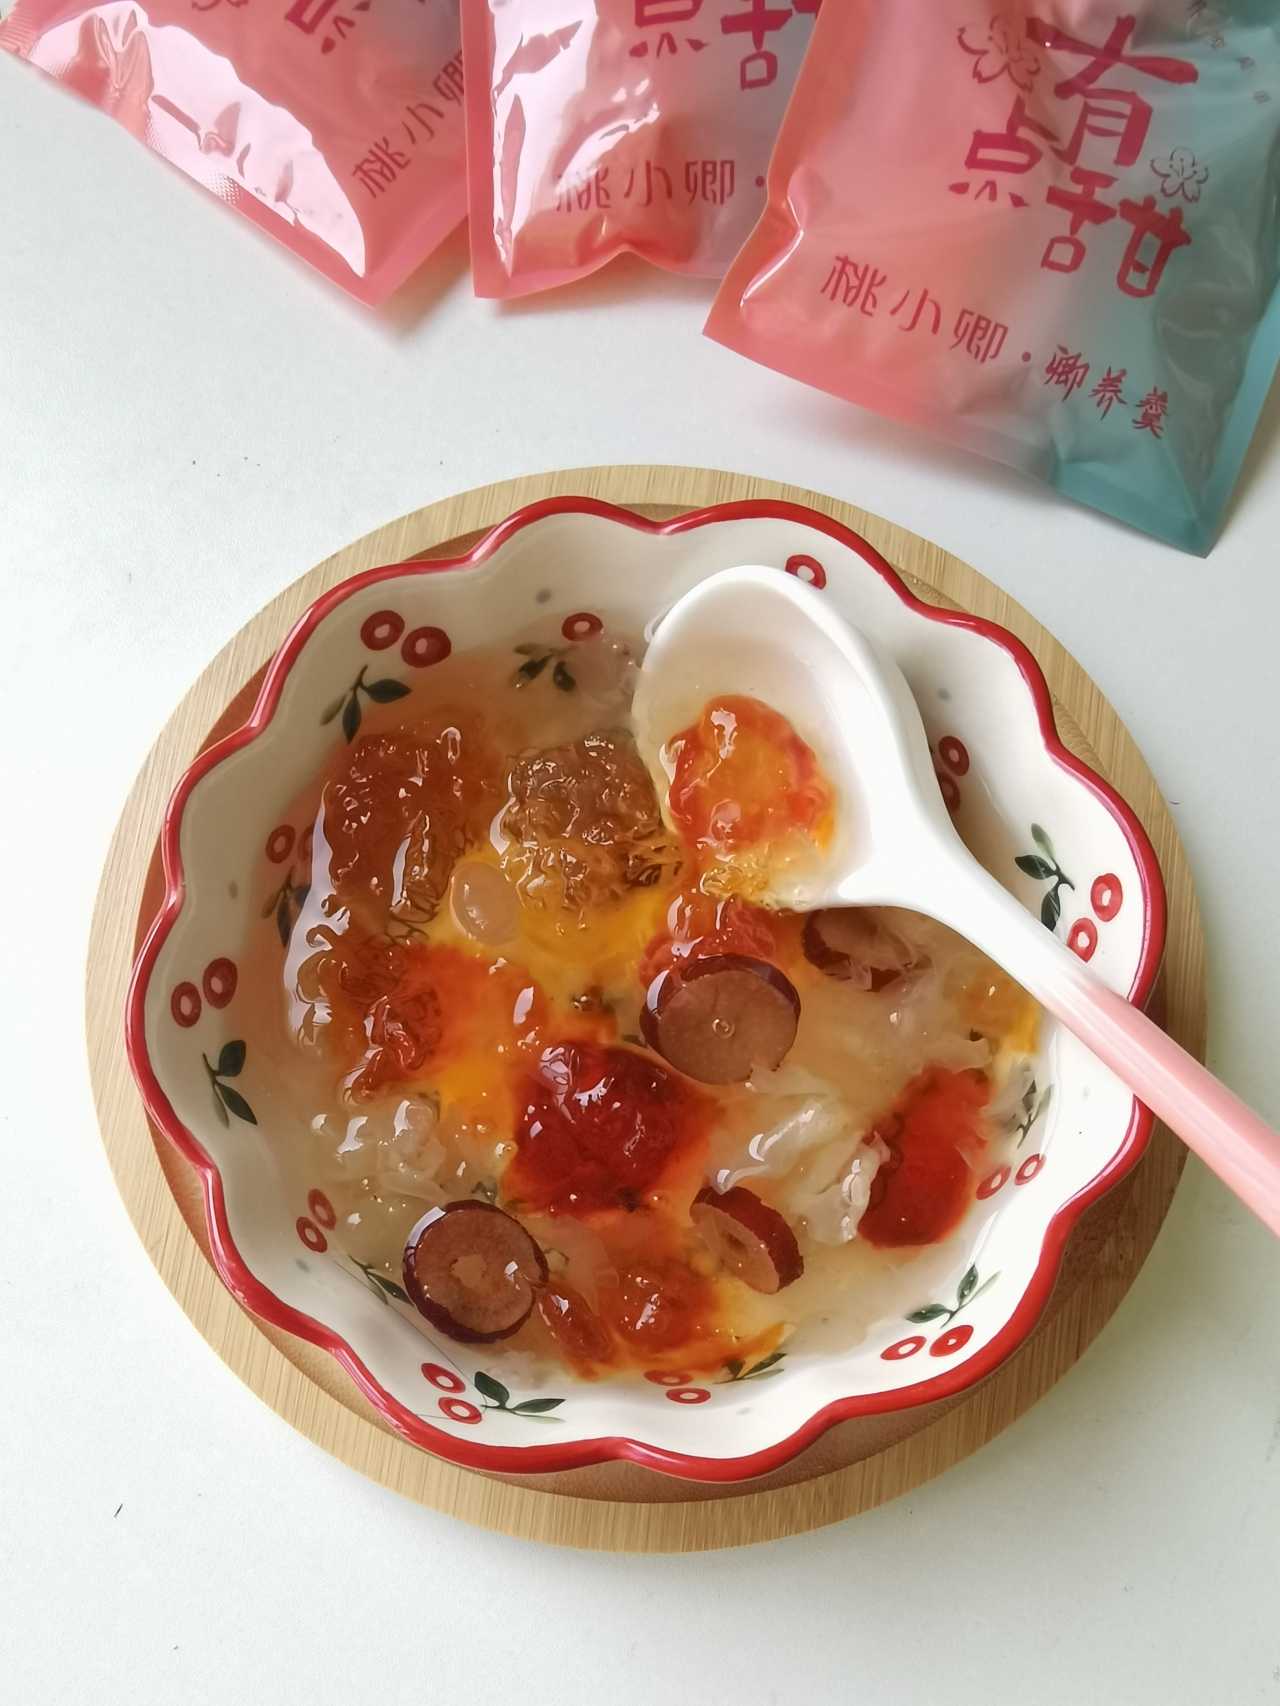 ㊙️一碗顶10片面膜‼️雪燕桃胶皂角米美容羹